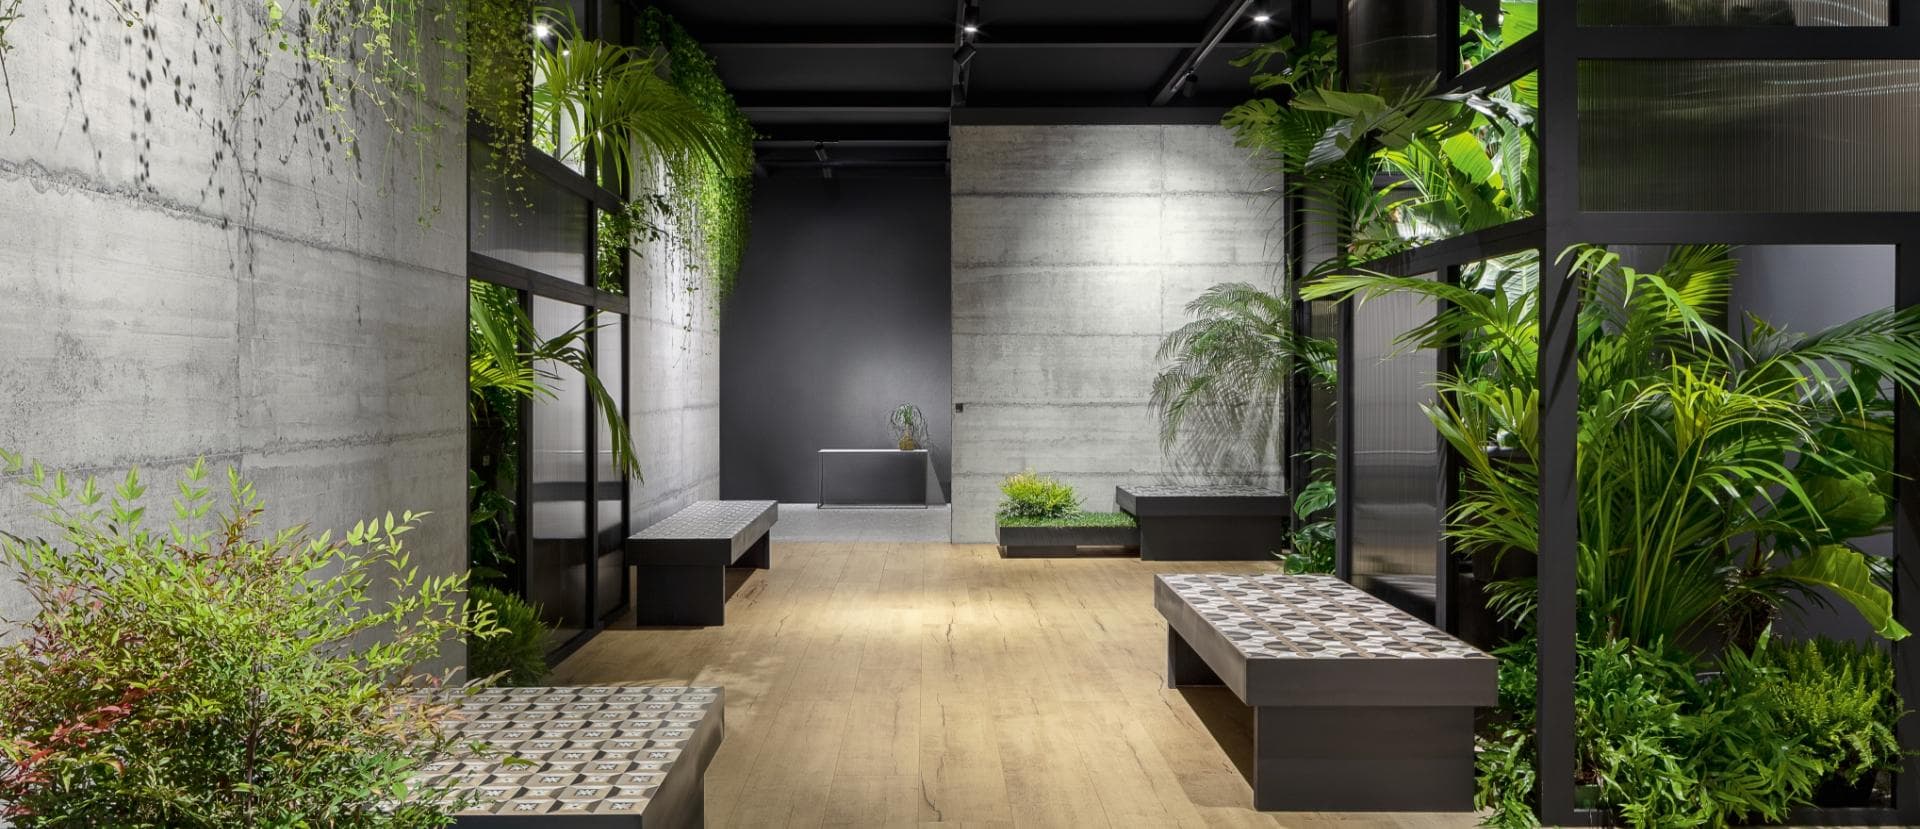 Premier Tile Store in Maroochydore: Natural Tile & Bathrooms